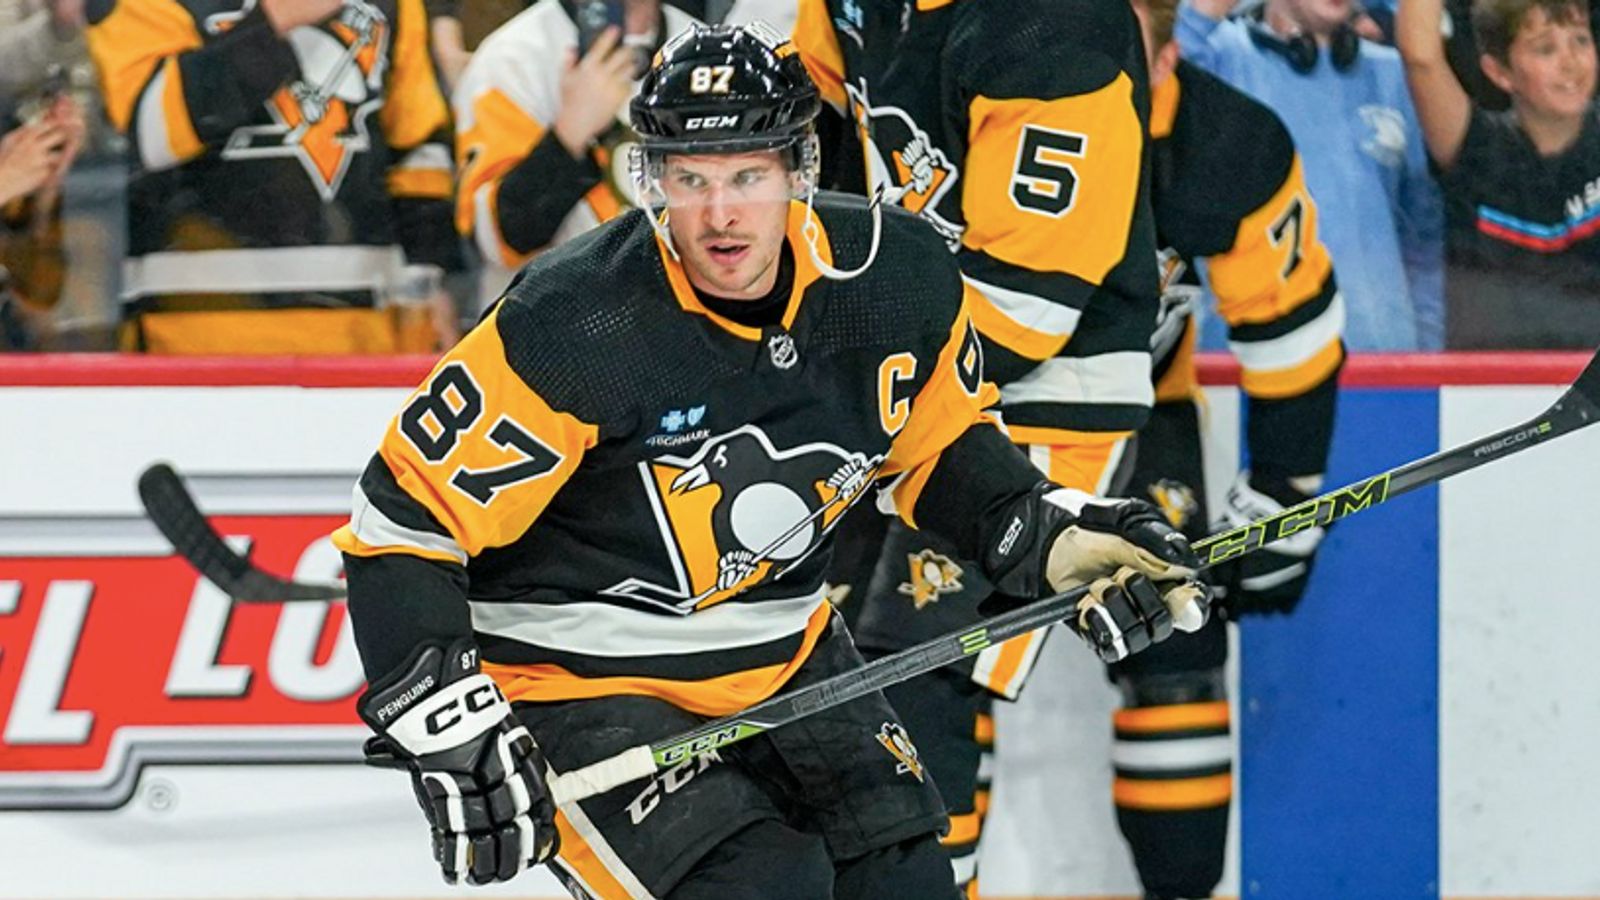 Nova Scotia's No. 1 athlete, Sidney Crosby making sure he 'enjoys every  minute